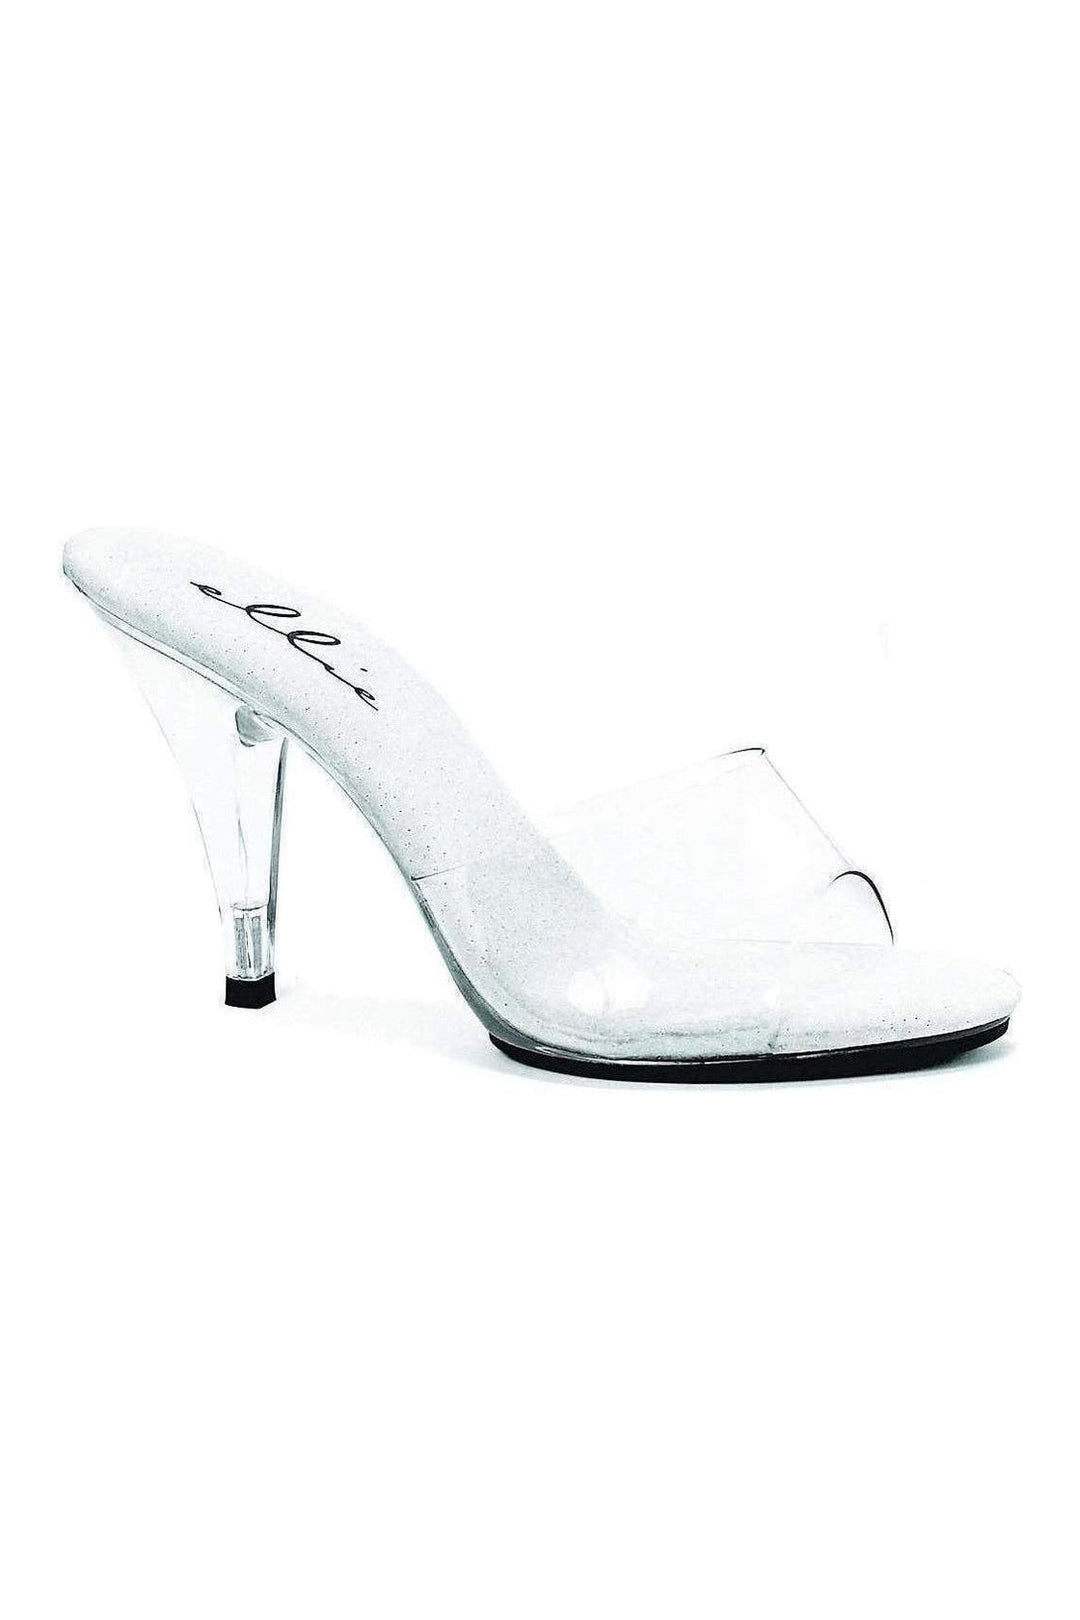 405-VANITY Slide | Clear Vinyl-Ellie Shoes-Clear-Slides-SEXYSHOES.COM